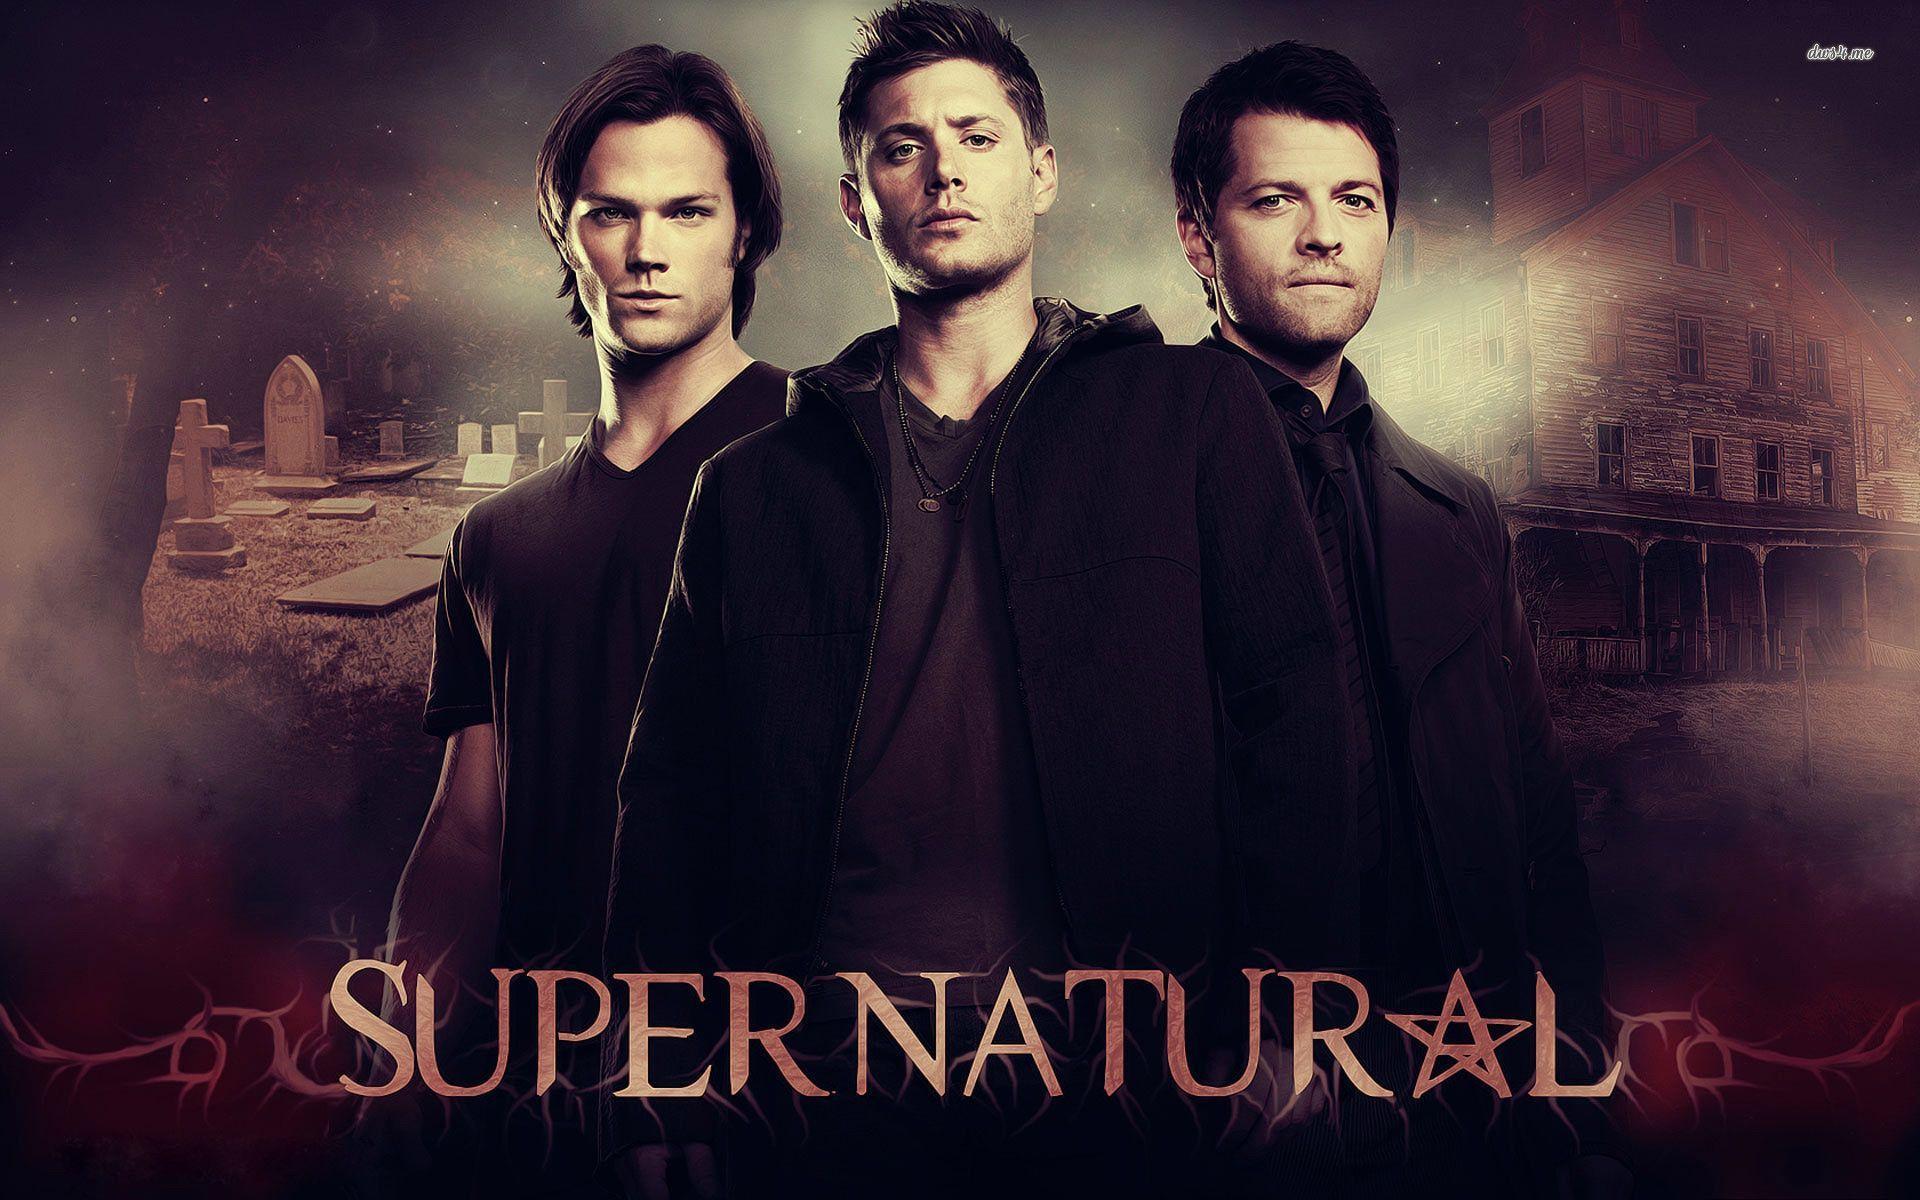 1. "Supernatural" TV series - wide 4